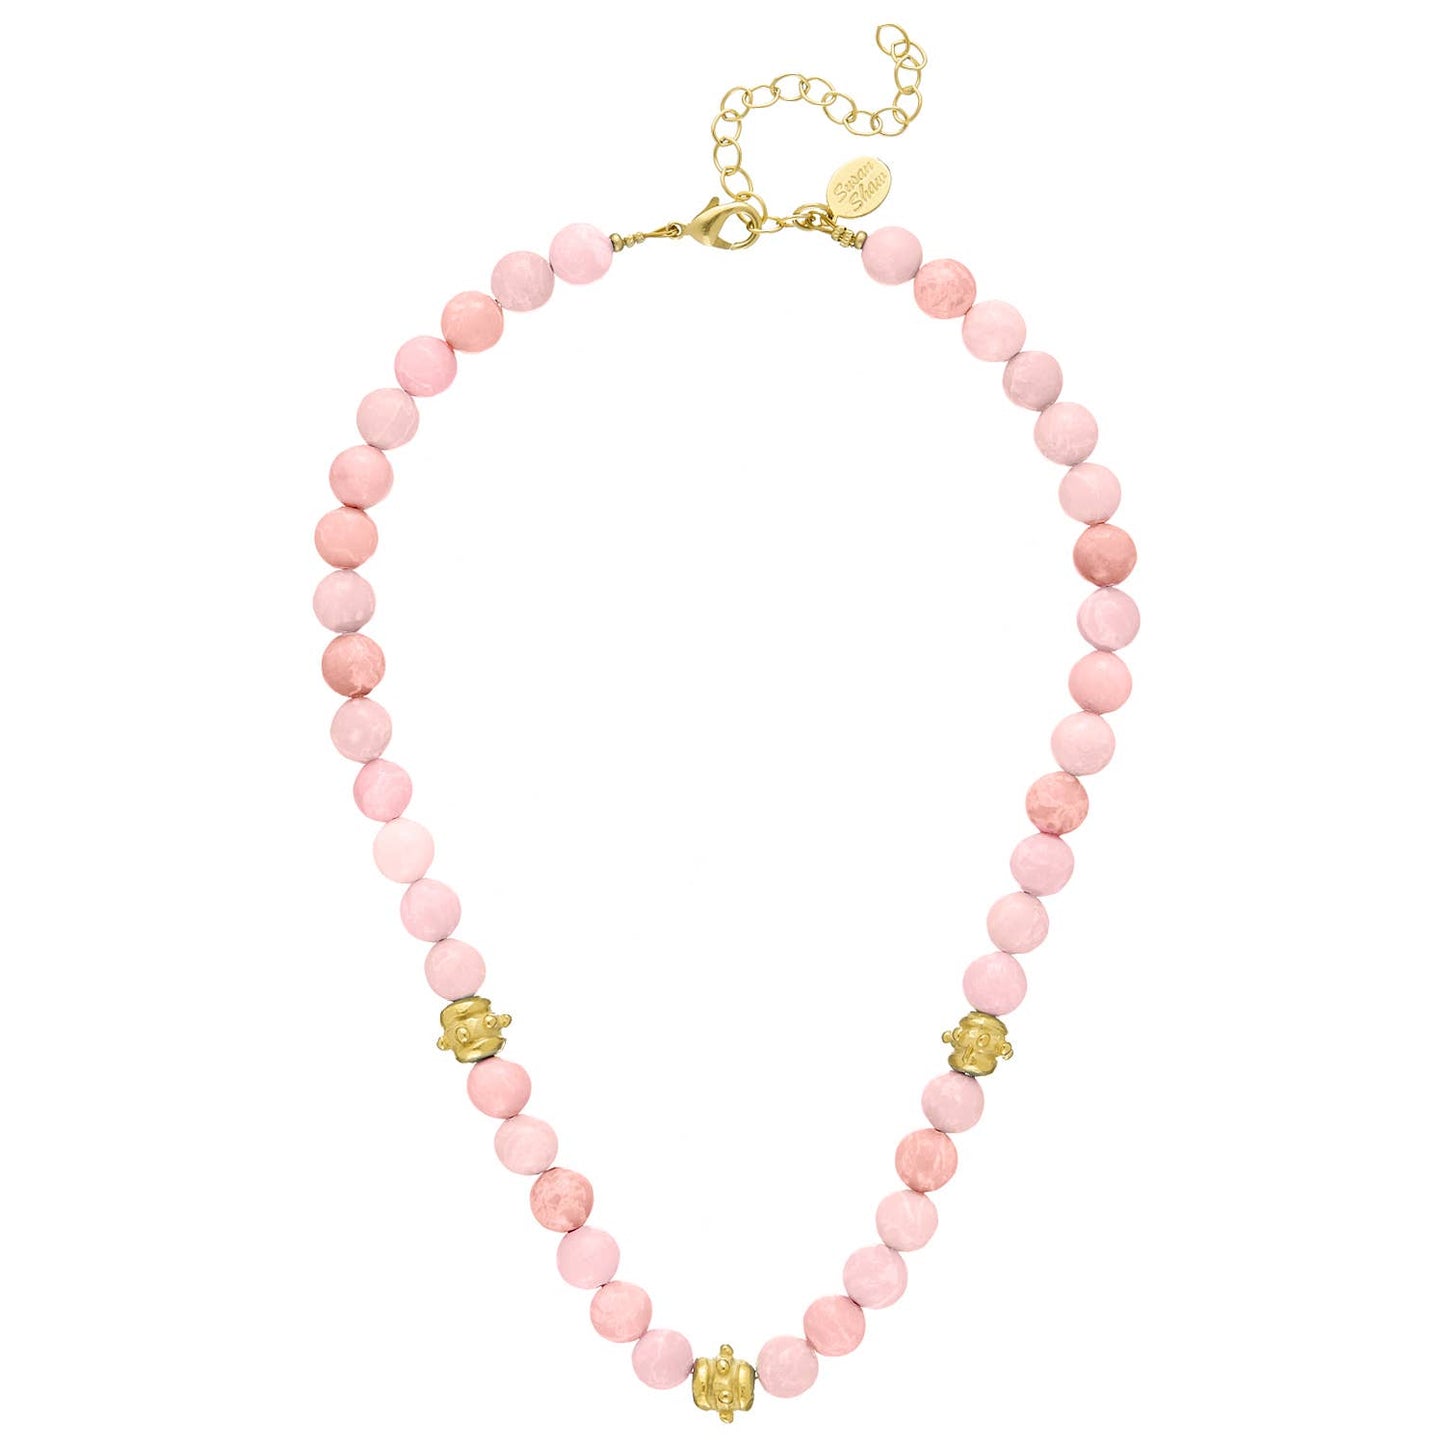 Pink Jade with Handcast Gold Bentley Beads Necklace